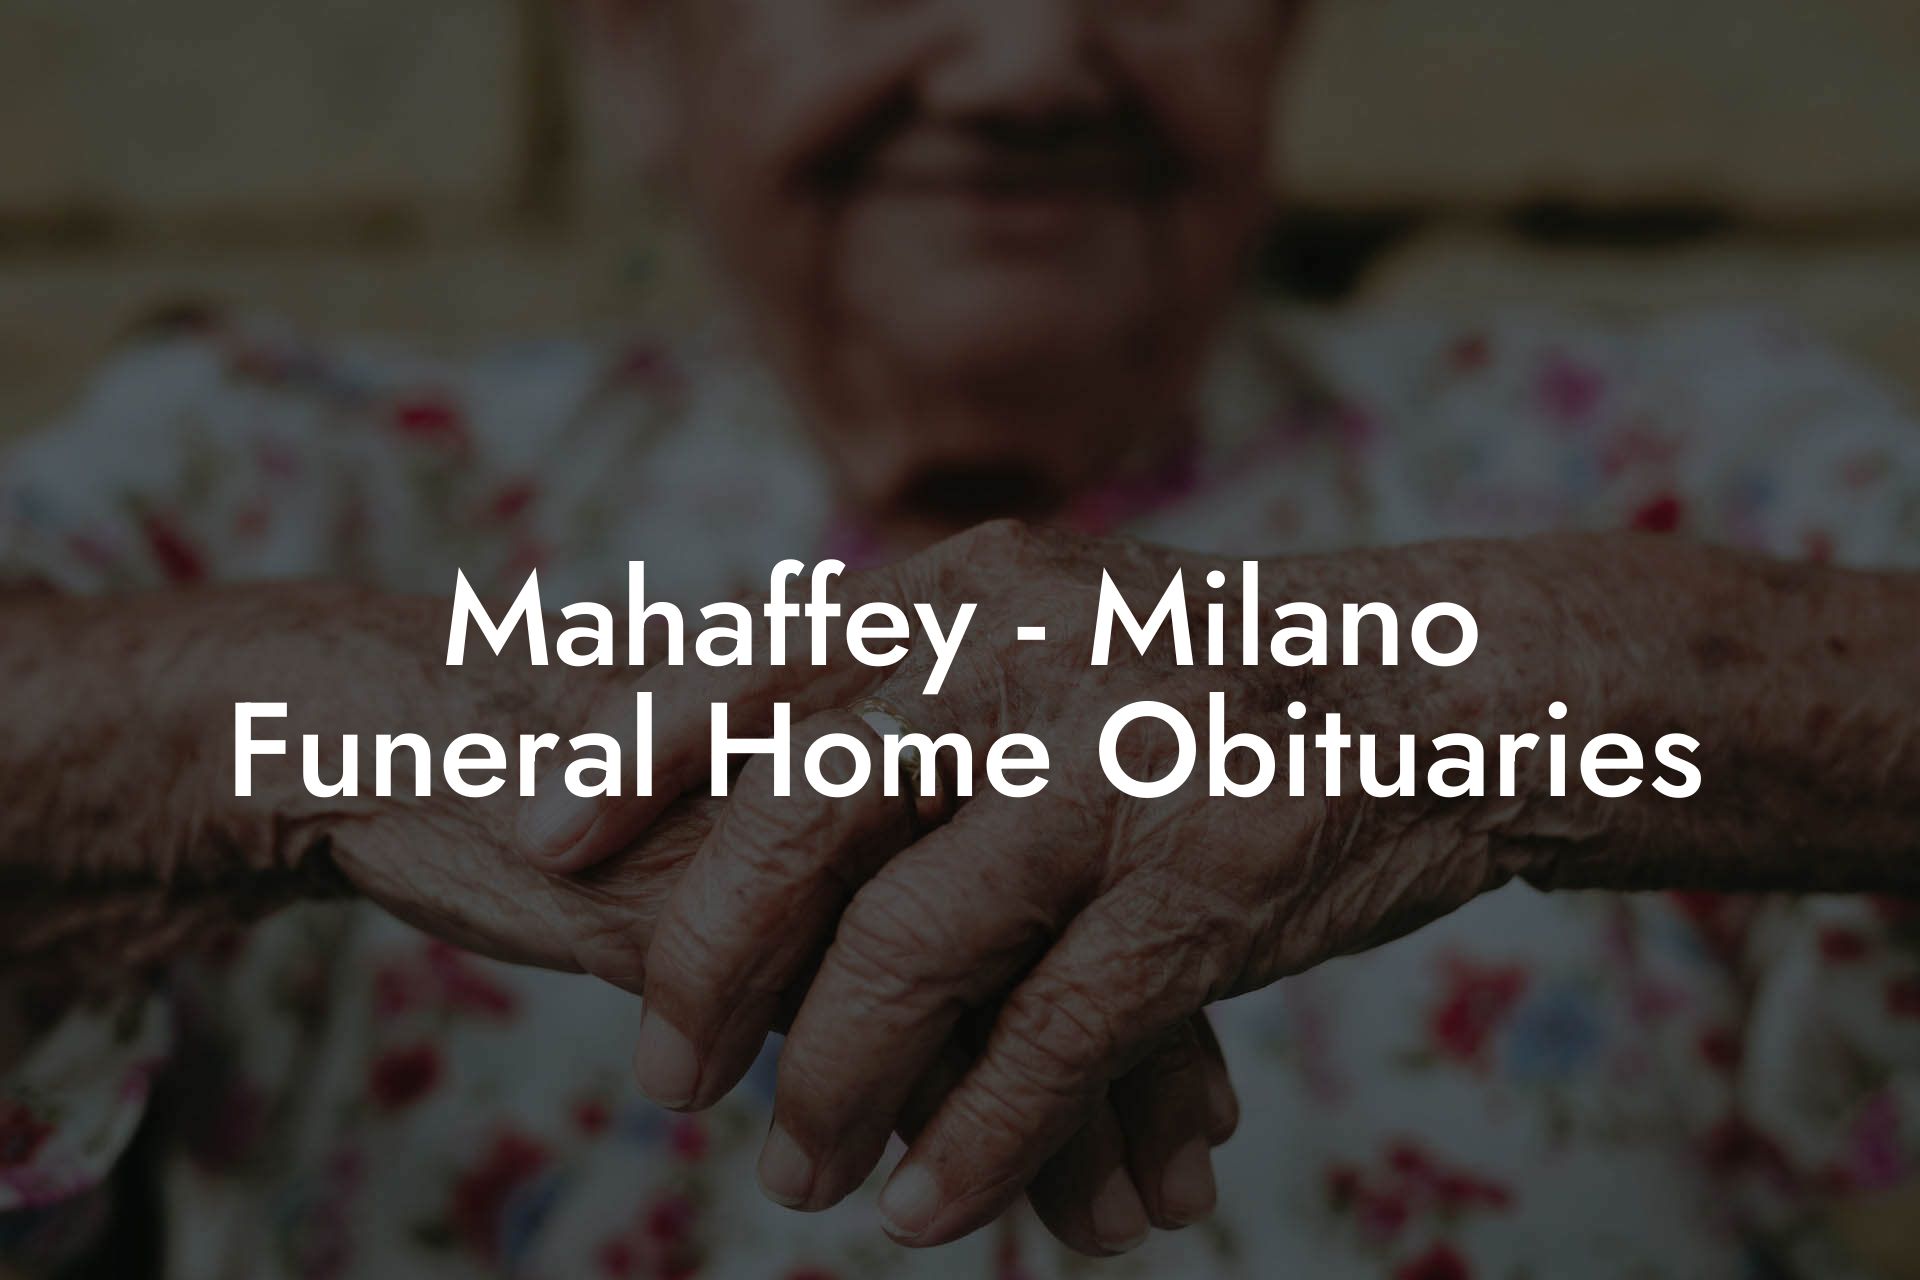 Mahaffey - Milano Funeral Home Obituaries